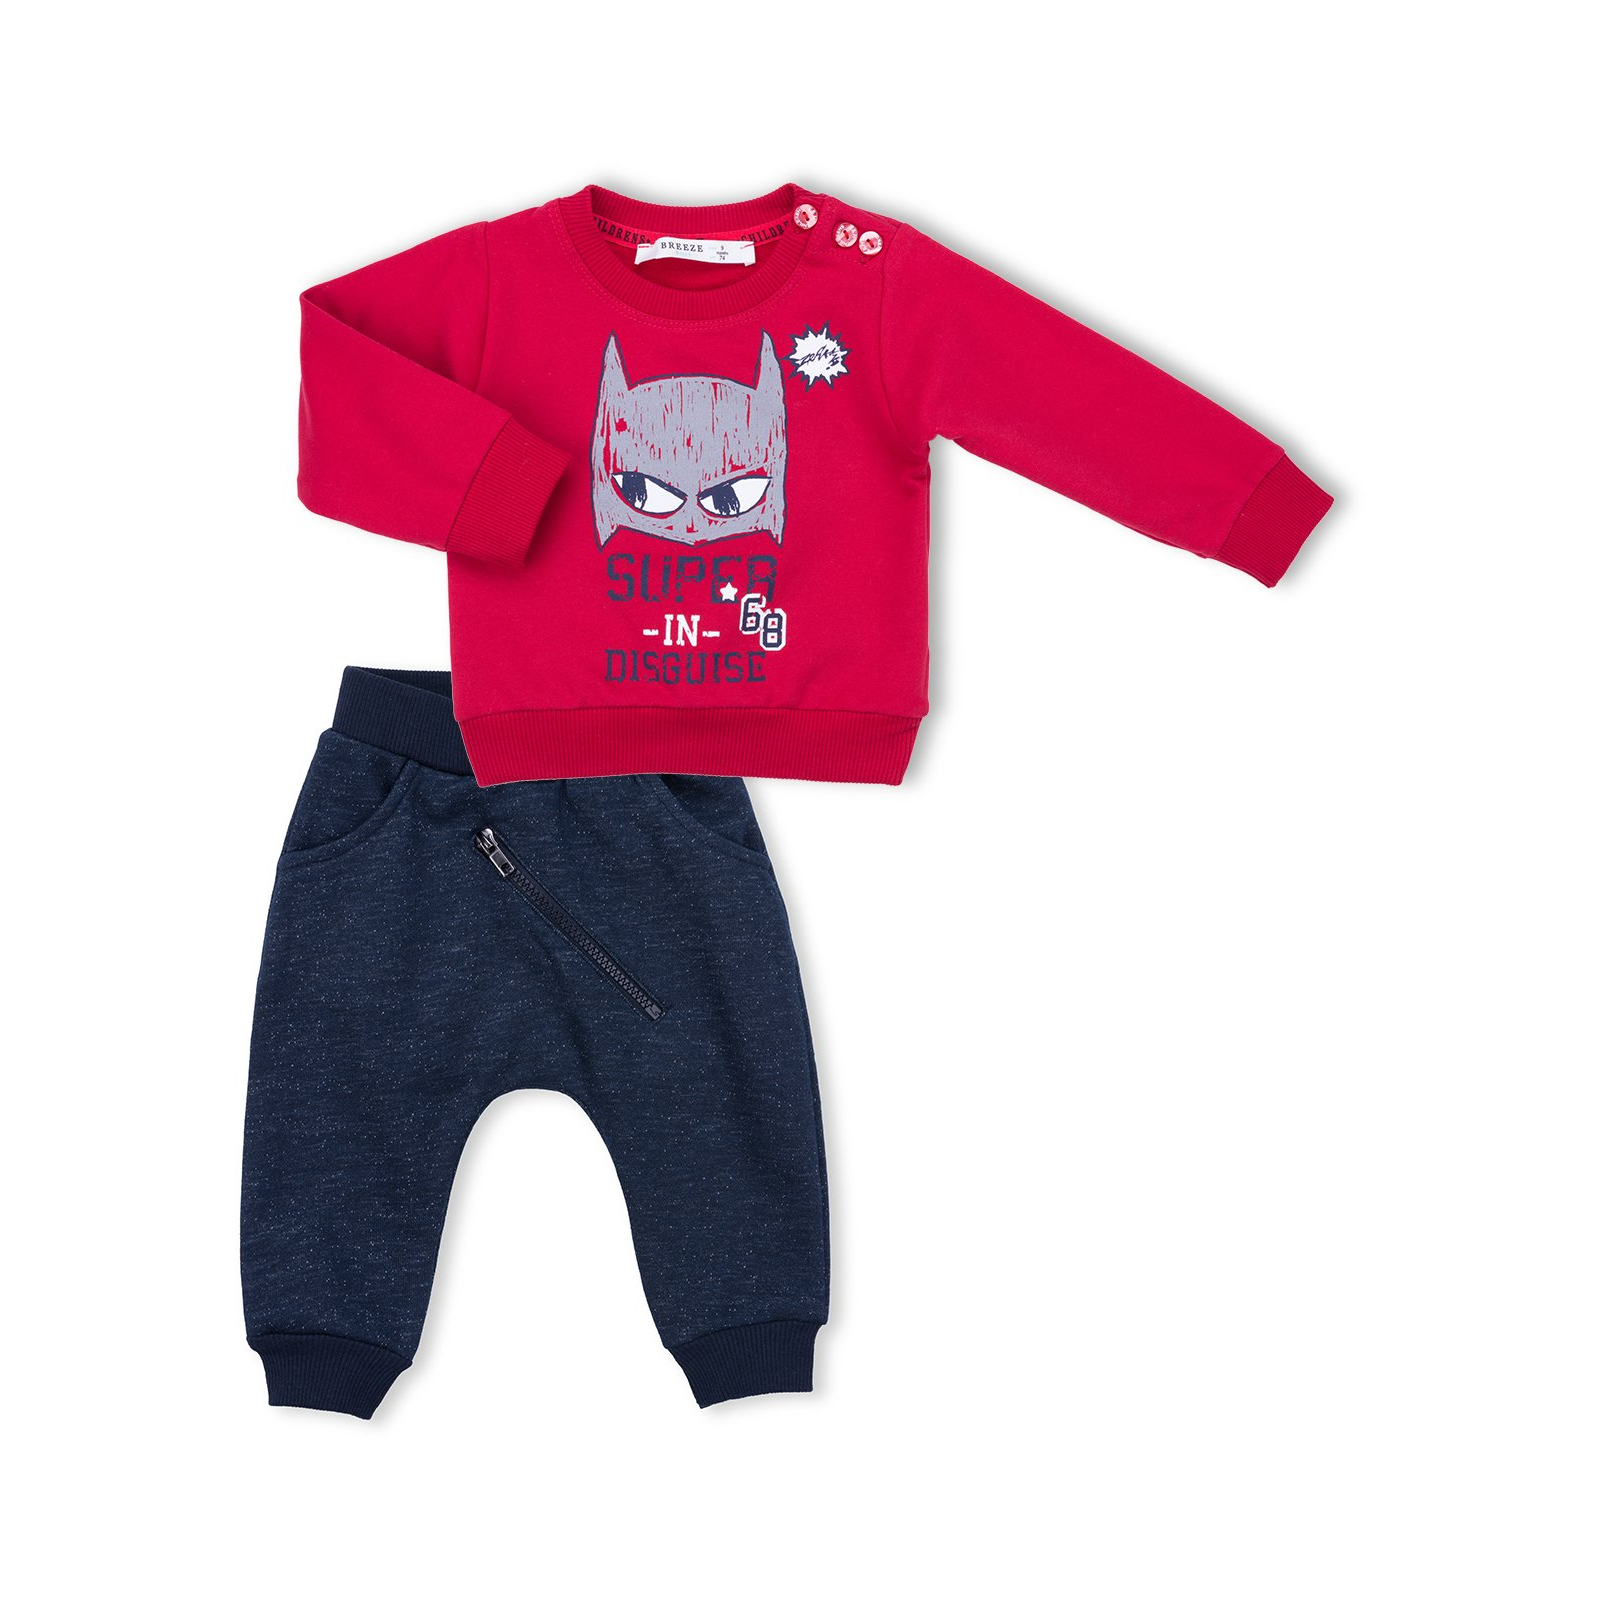 Набор детской одежды Breeze "Super in disguise" (10419-74B-red)